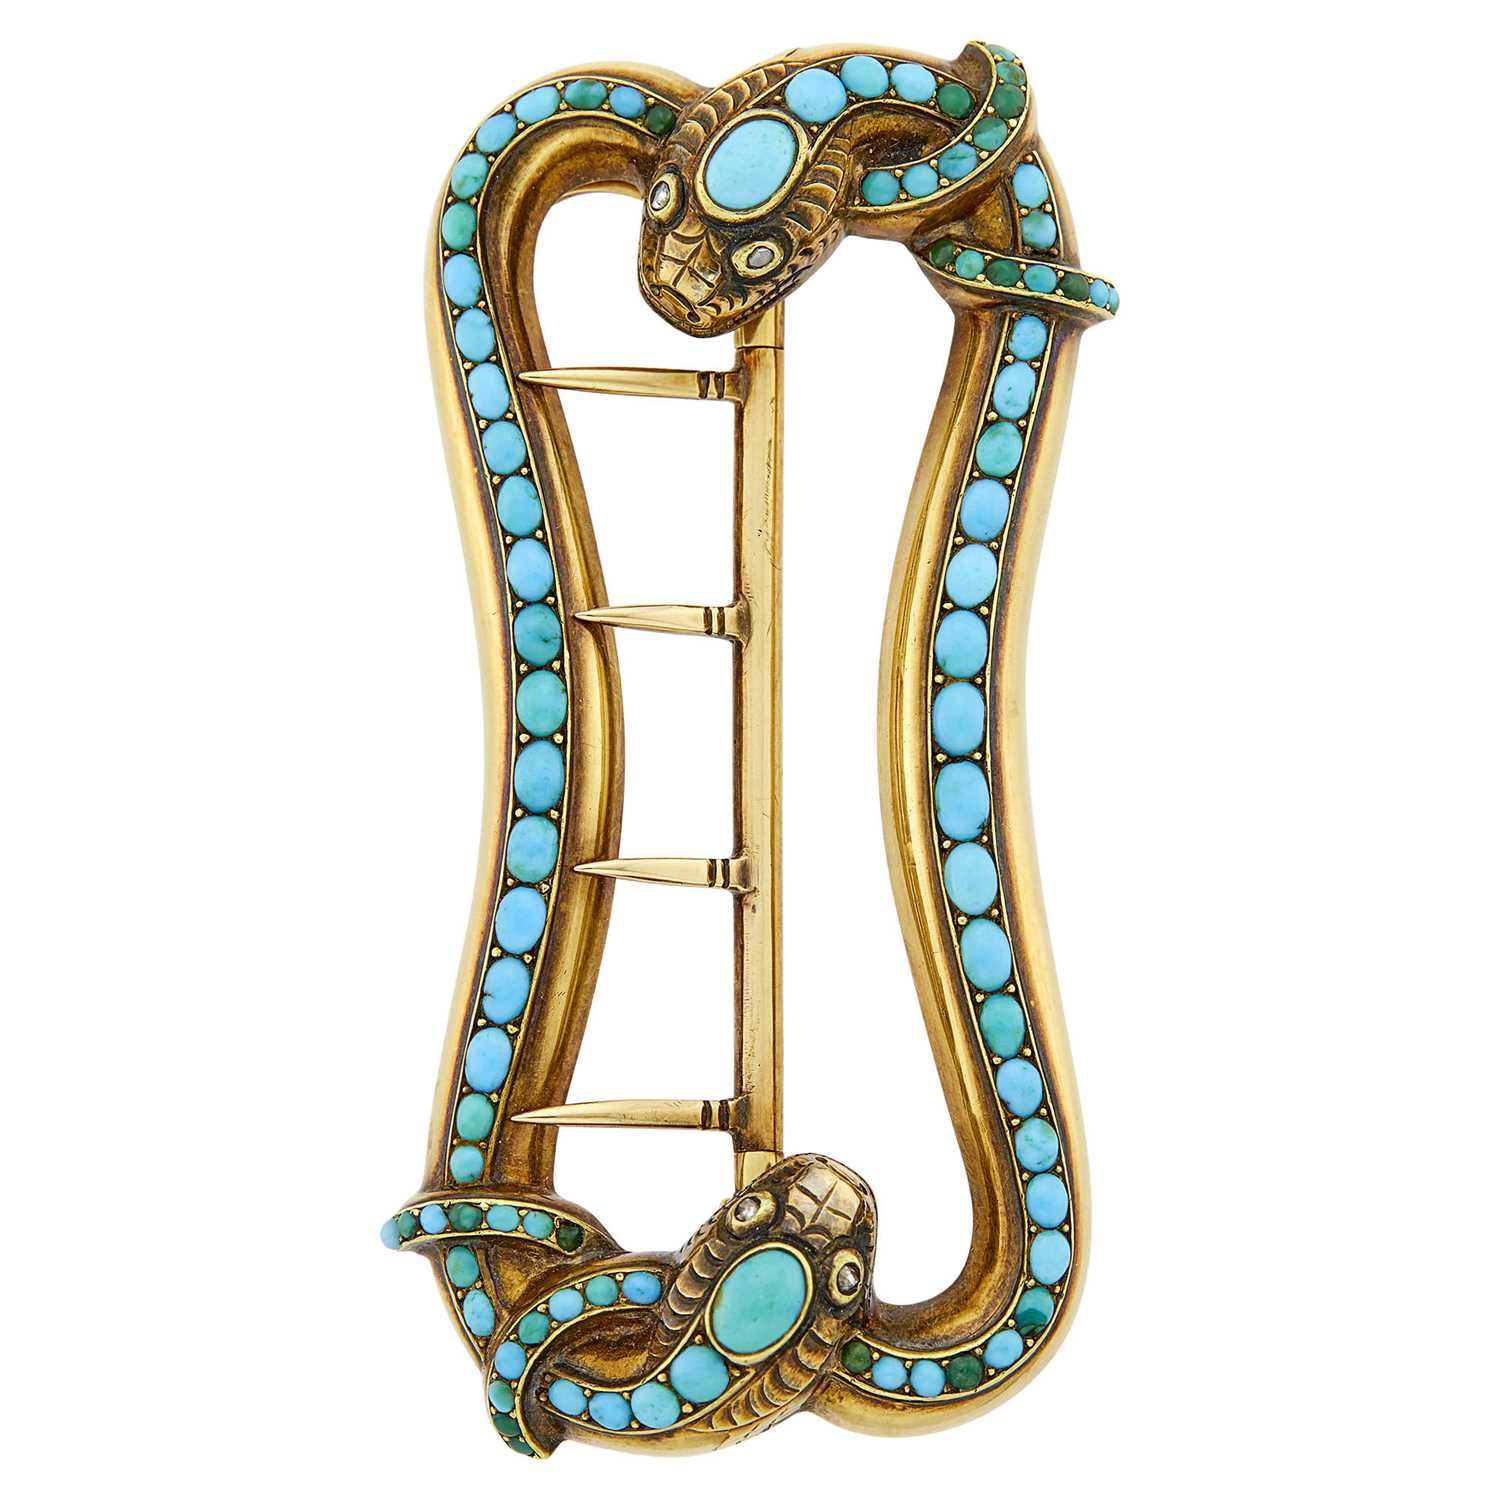 Lot 1070 - Antique Low Karat Gold, Turquoise and Diamond Serpent Belt Buckle